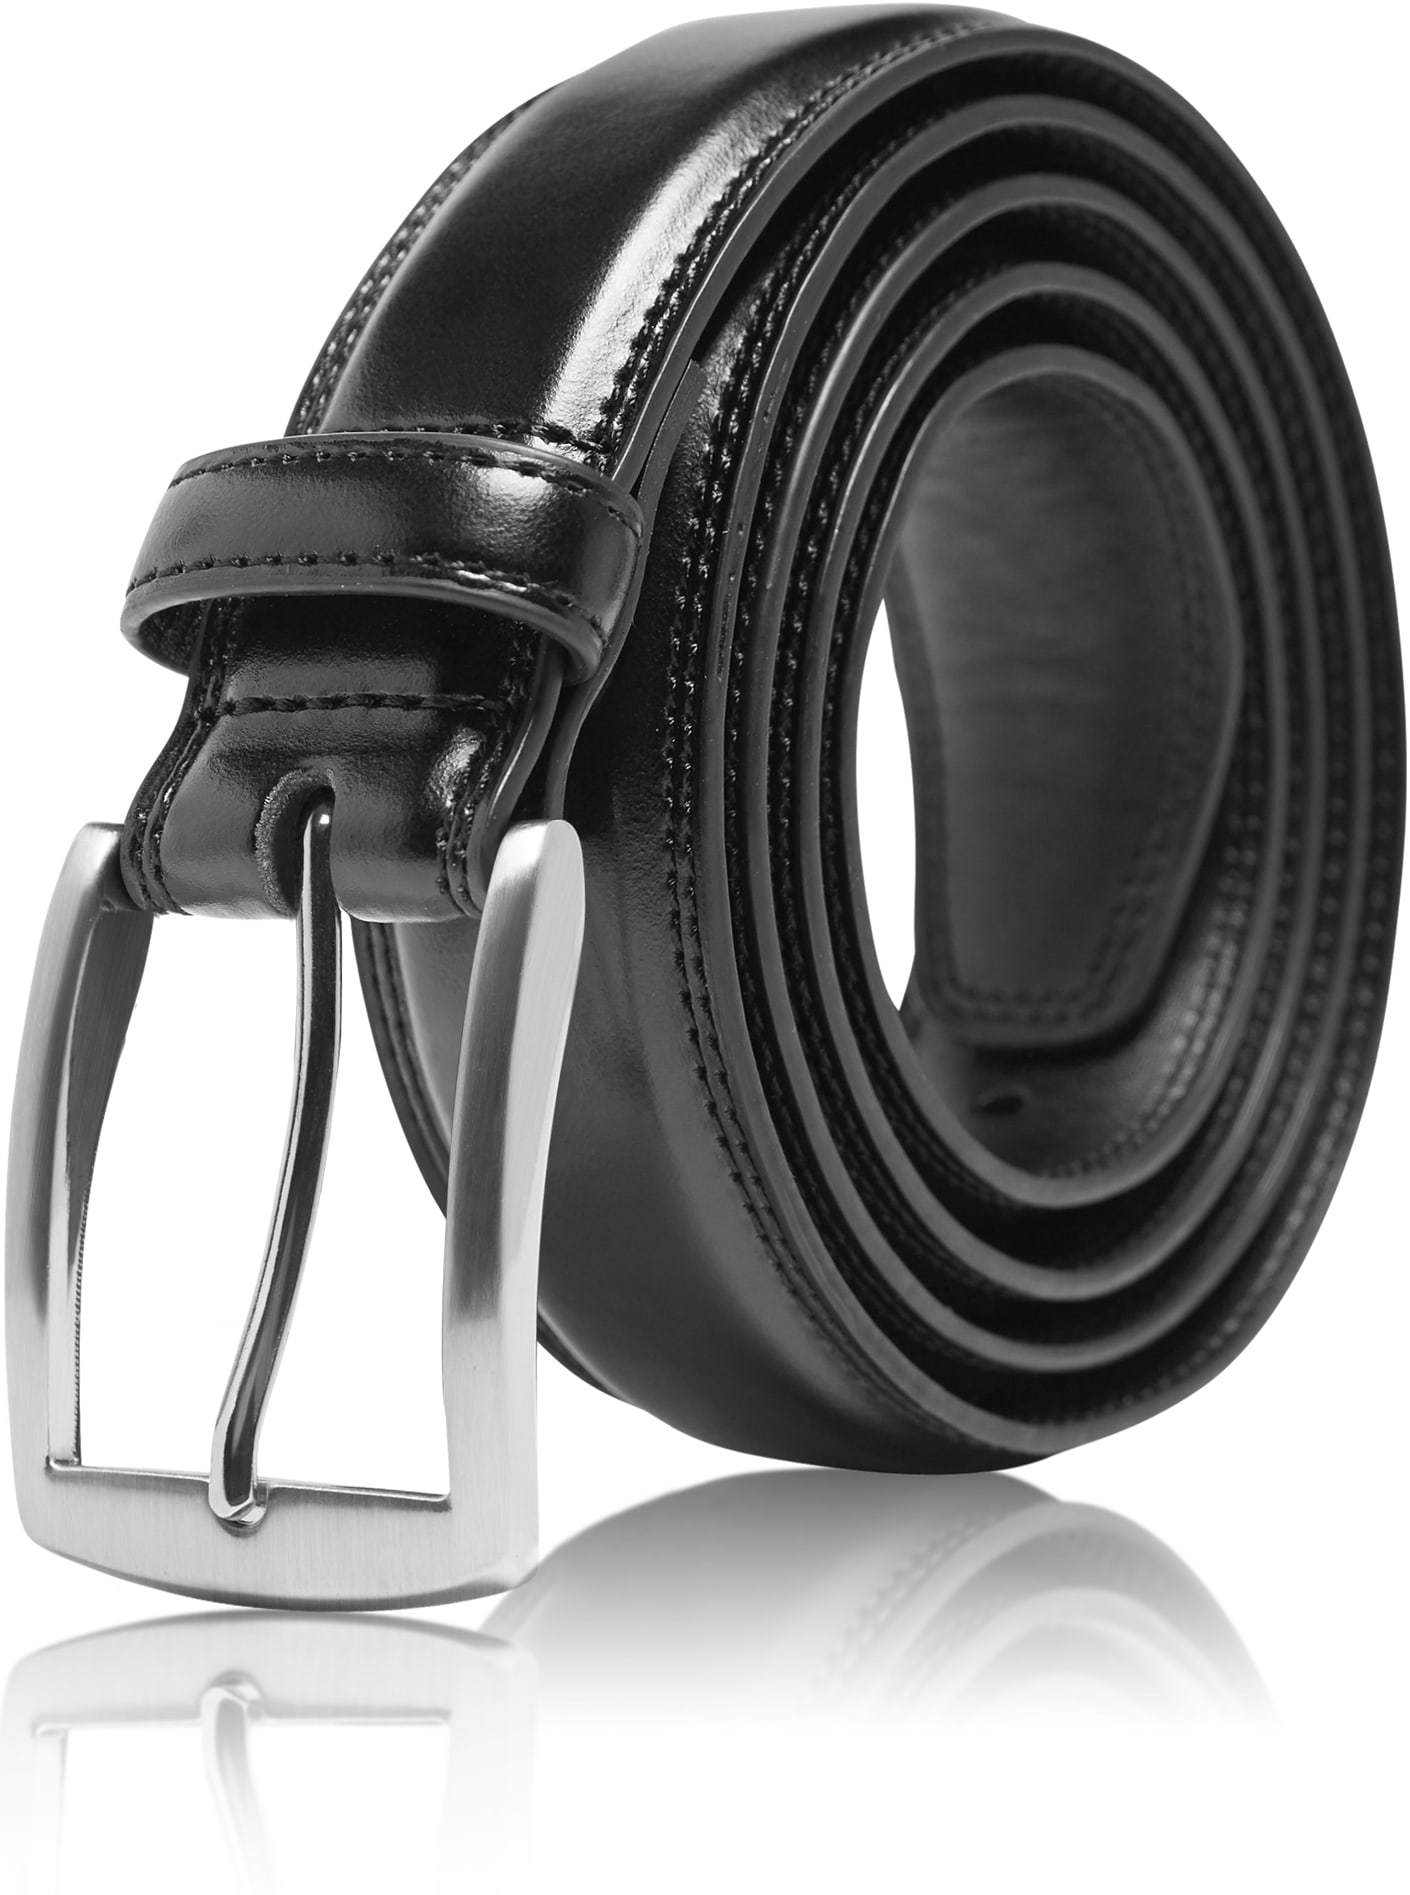  TWDYC Leather Men's Belt for Men Buckle Belt Automatic